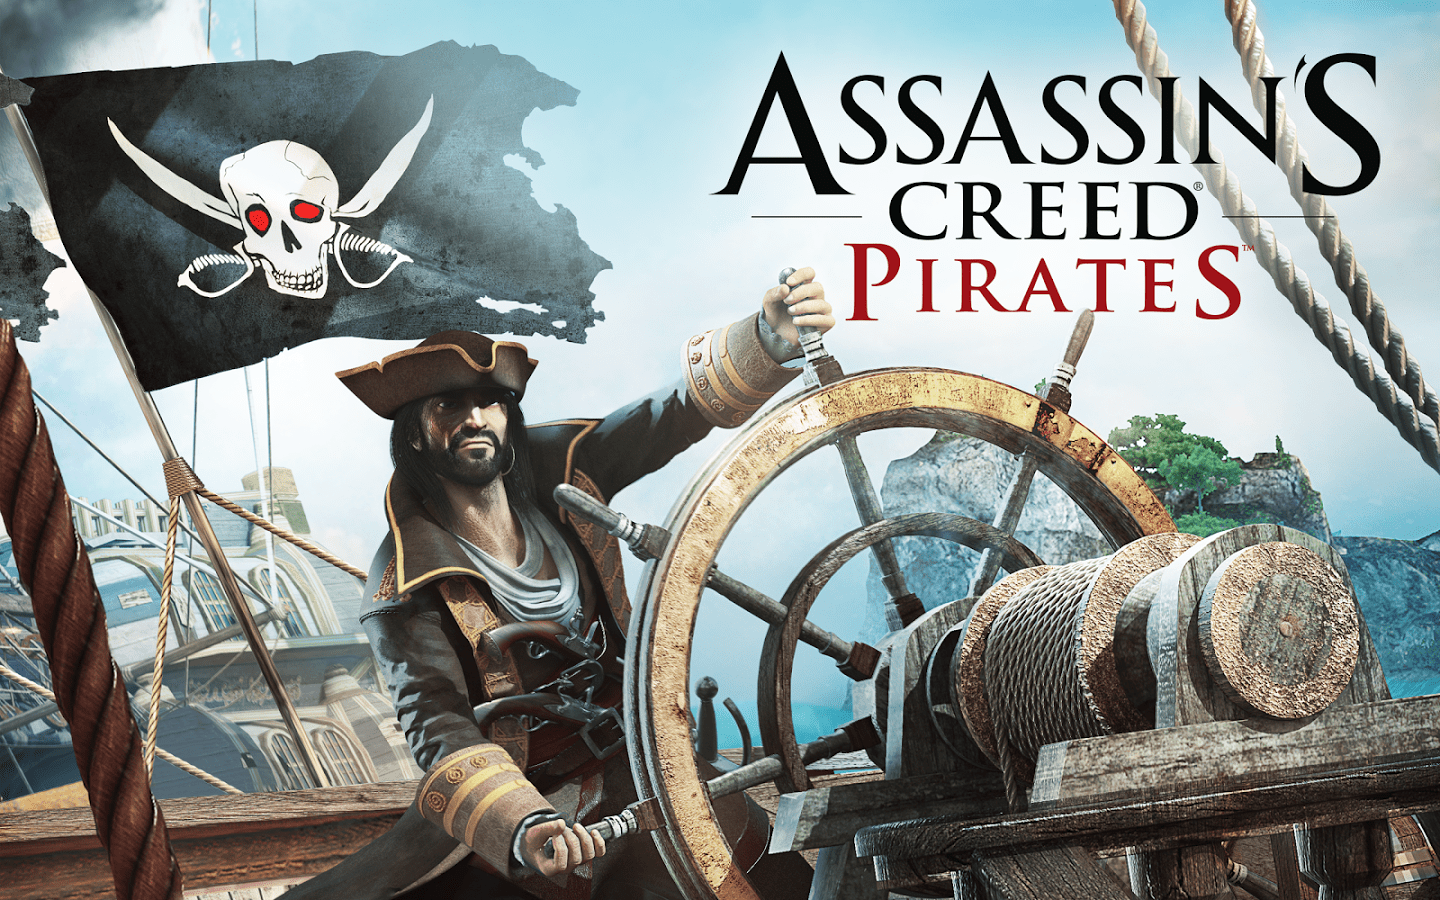 Assasin’s Creed Pirates à 0,10 euro sur le Play Store